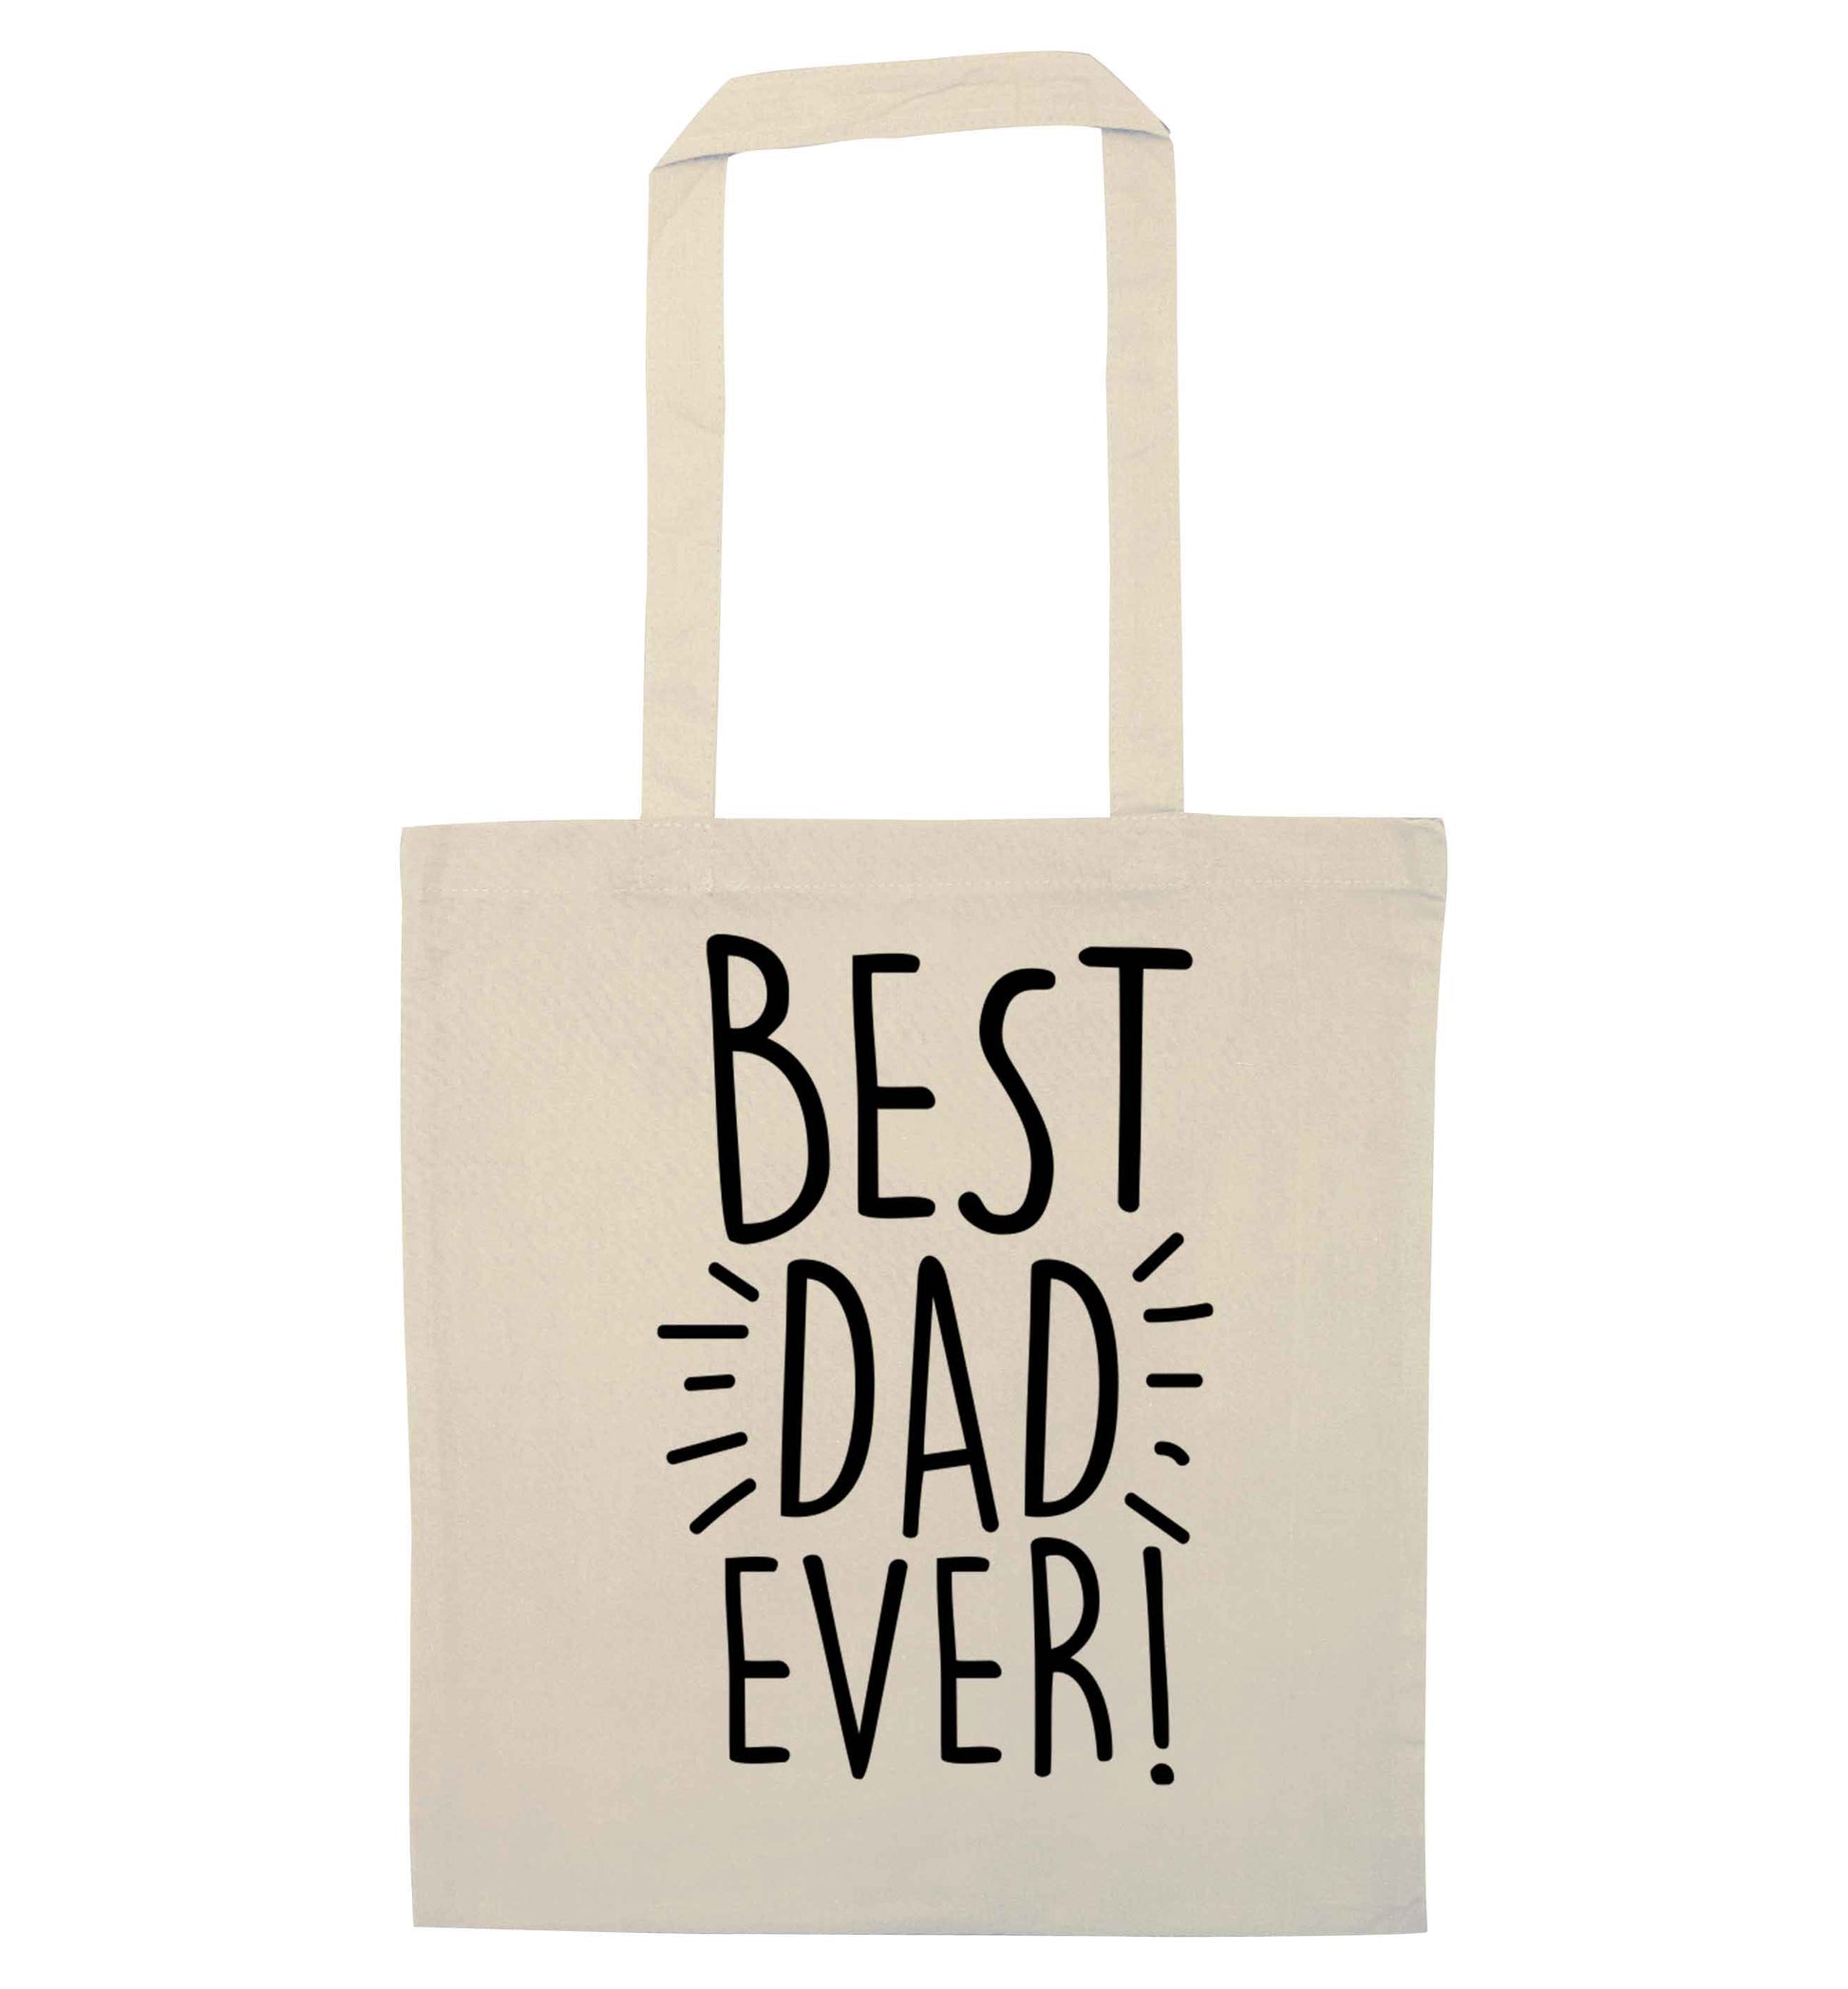 Best dad ever! natural tote bag